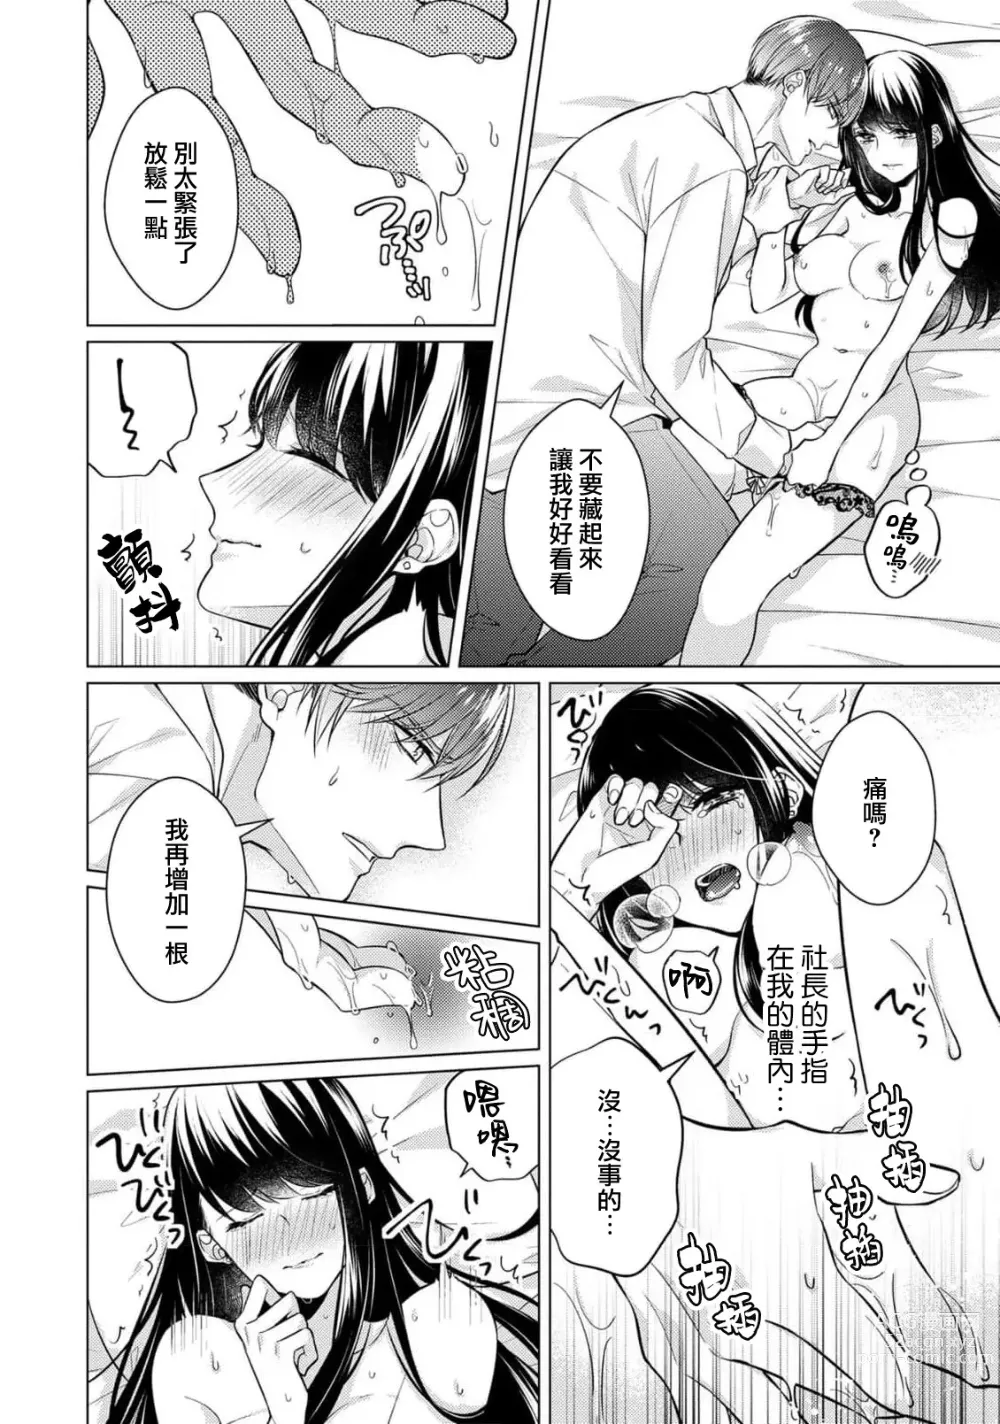 Page 27 of manga 宠爱王子和处女少女~30岁还是处女，这一次和真壁社长签订了炮友契约~ 1-5 end